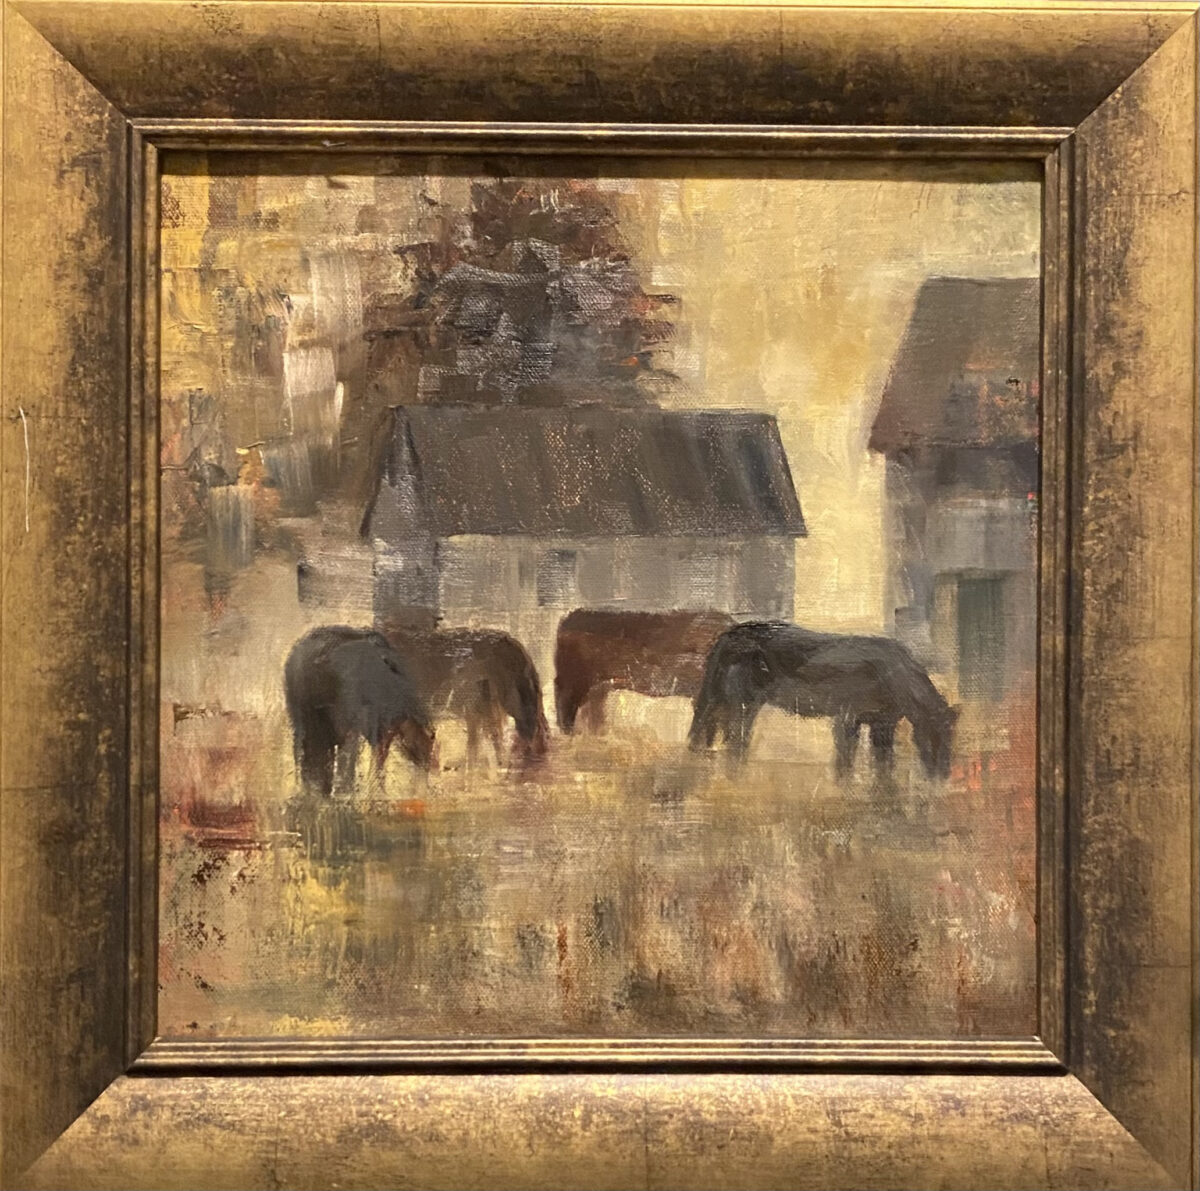 289 - Horses in Sunset - 12x12 - Landscape - $475